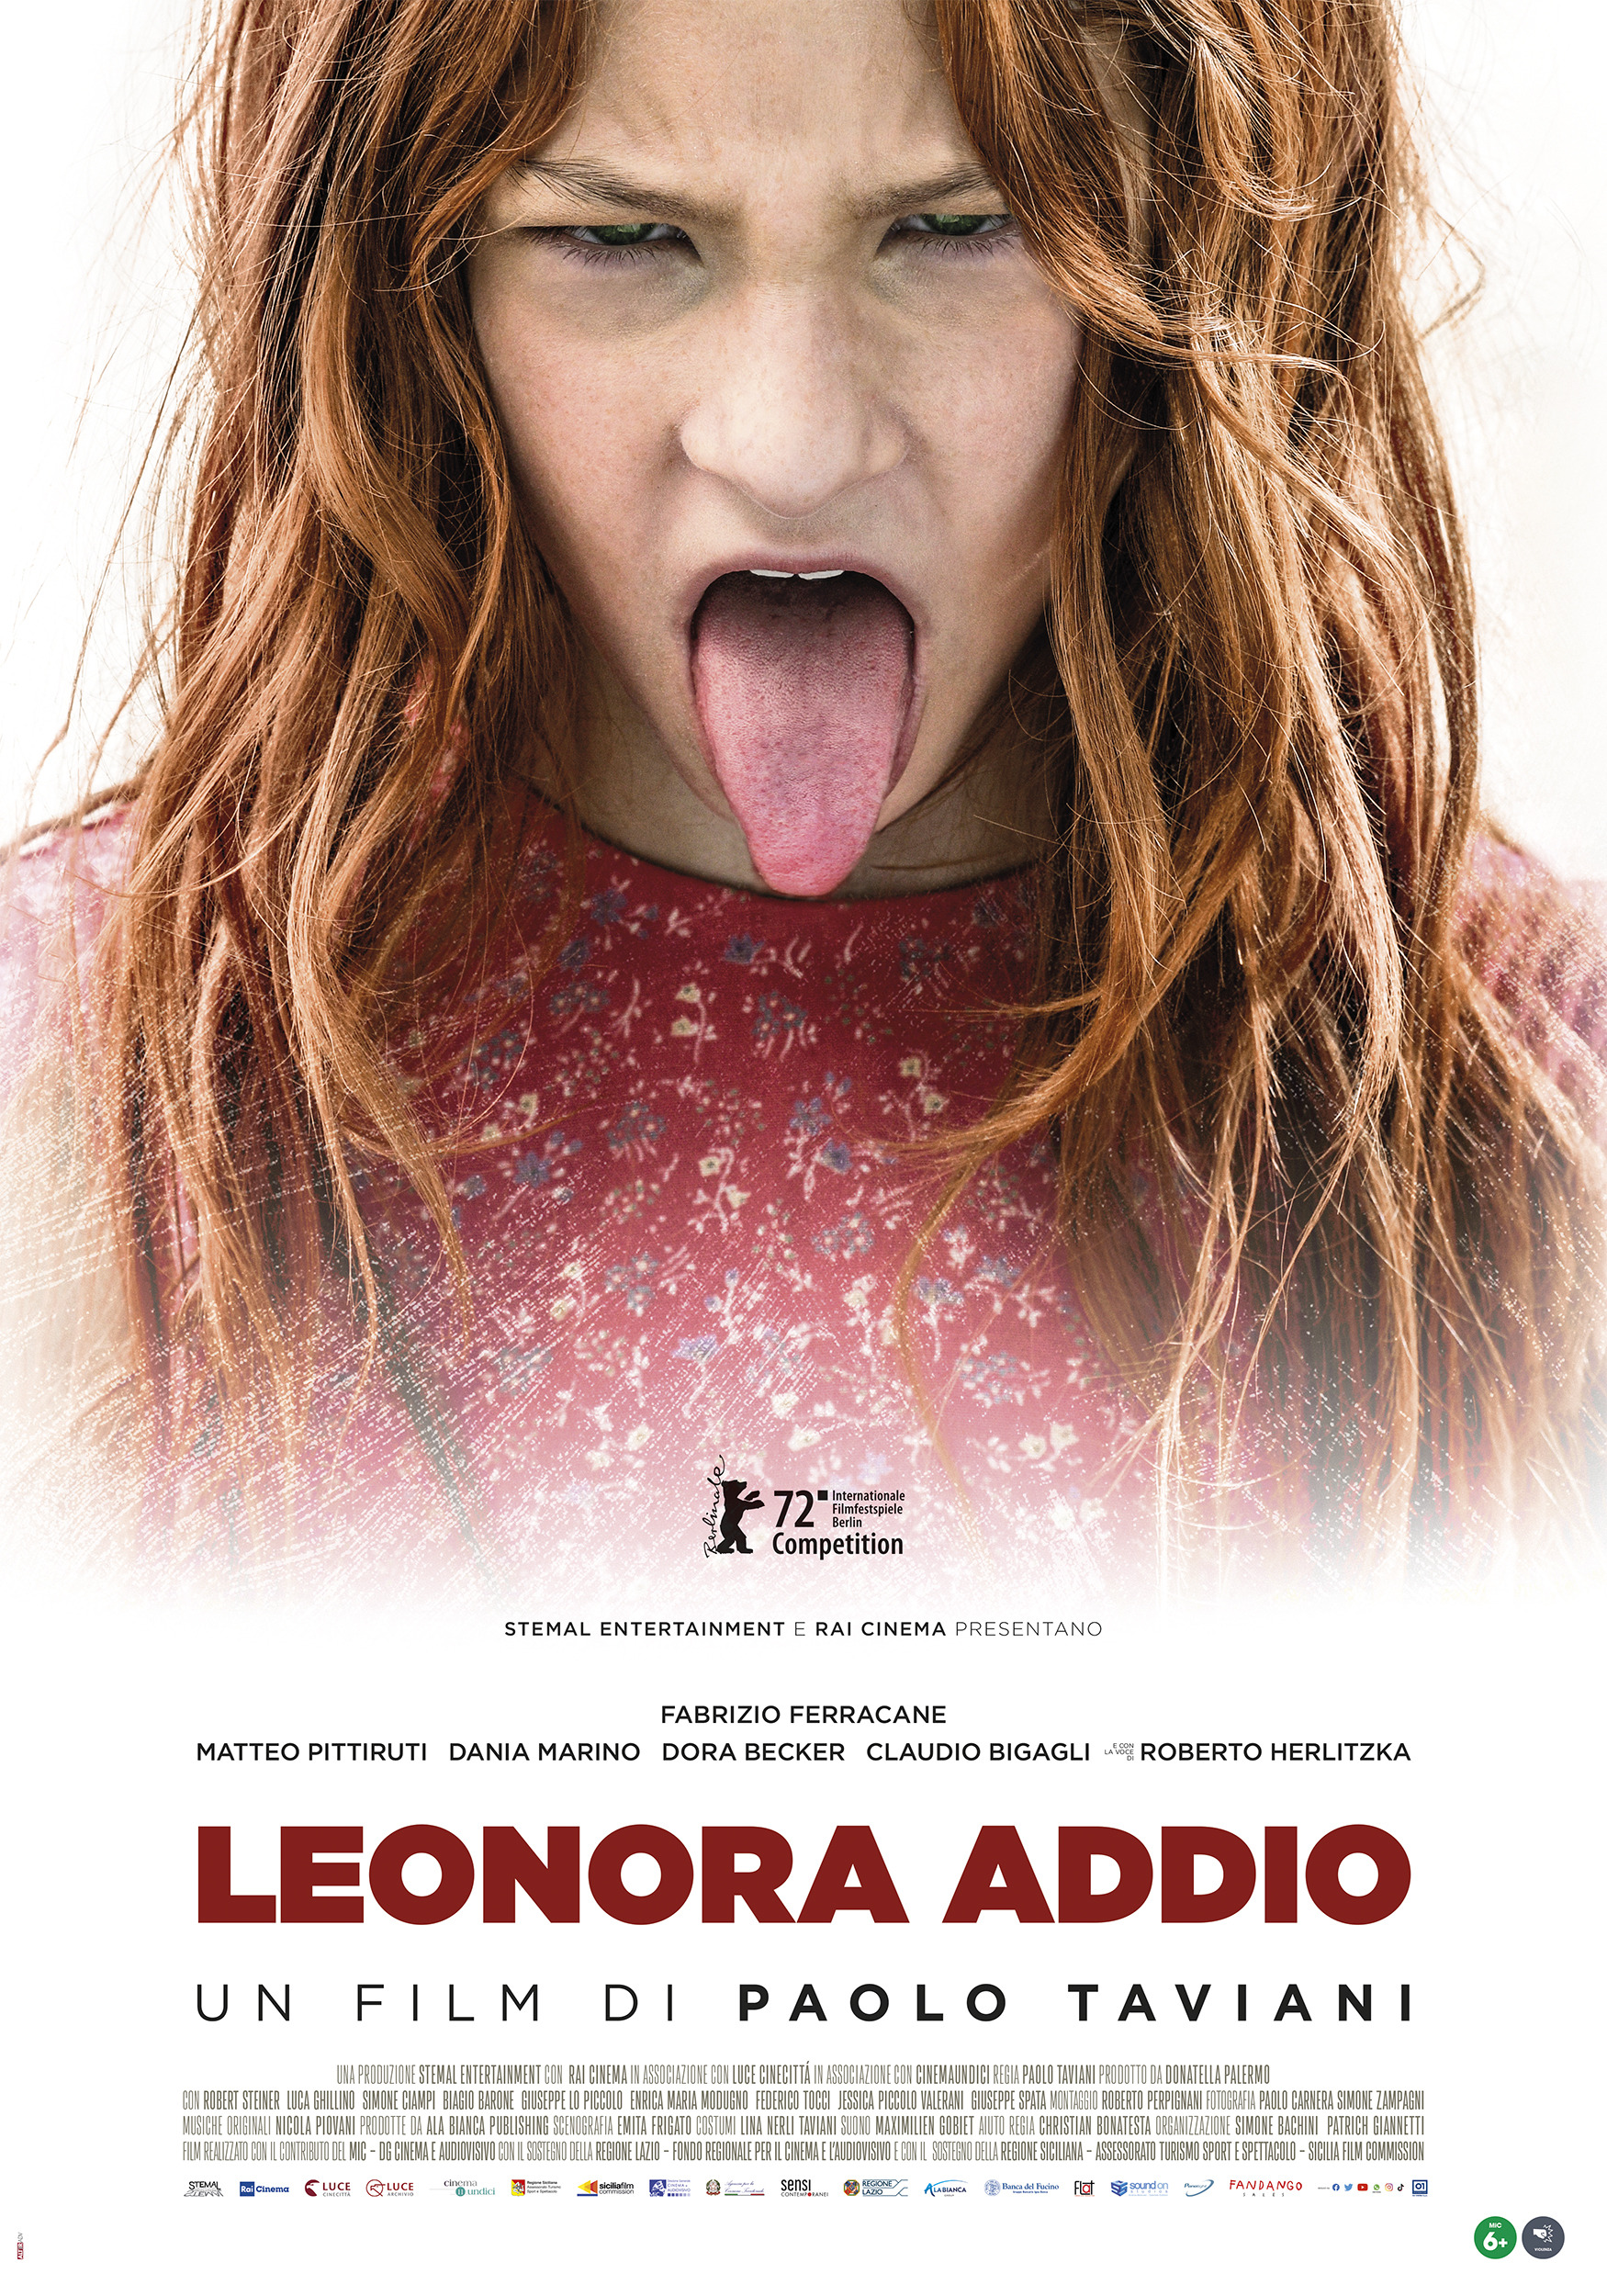 Mega Sized Movie Poster Image for Leonora addio 